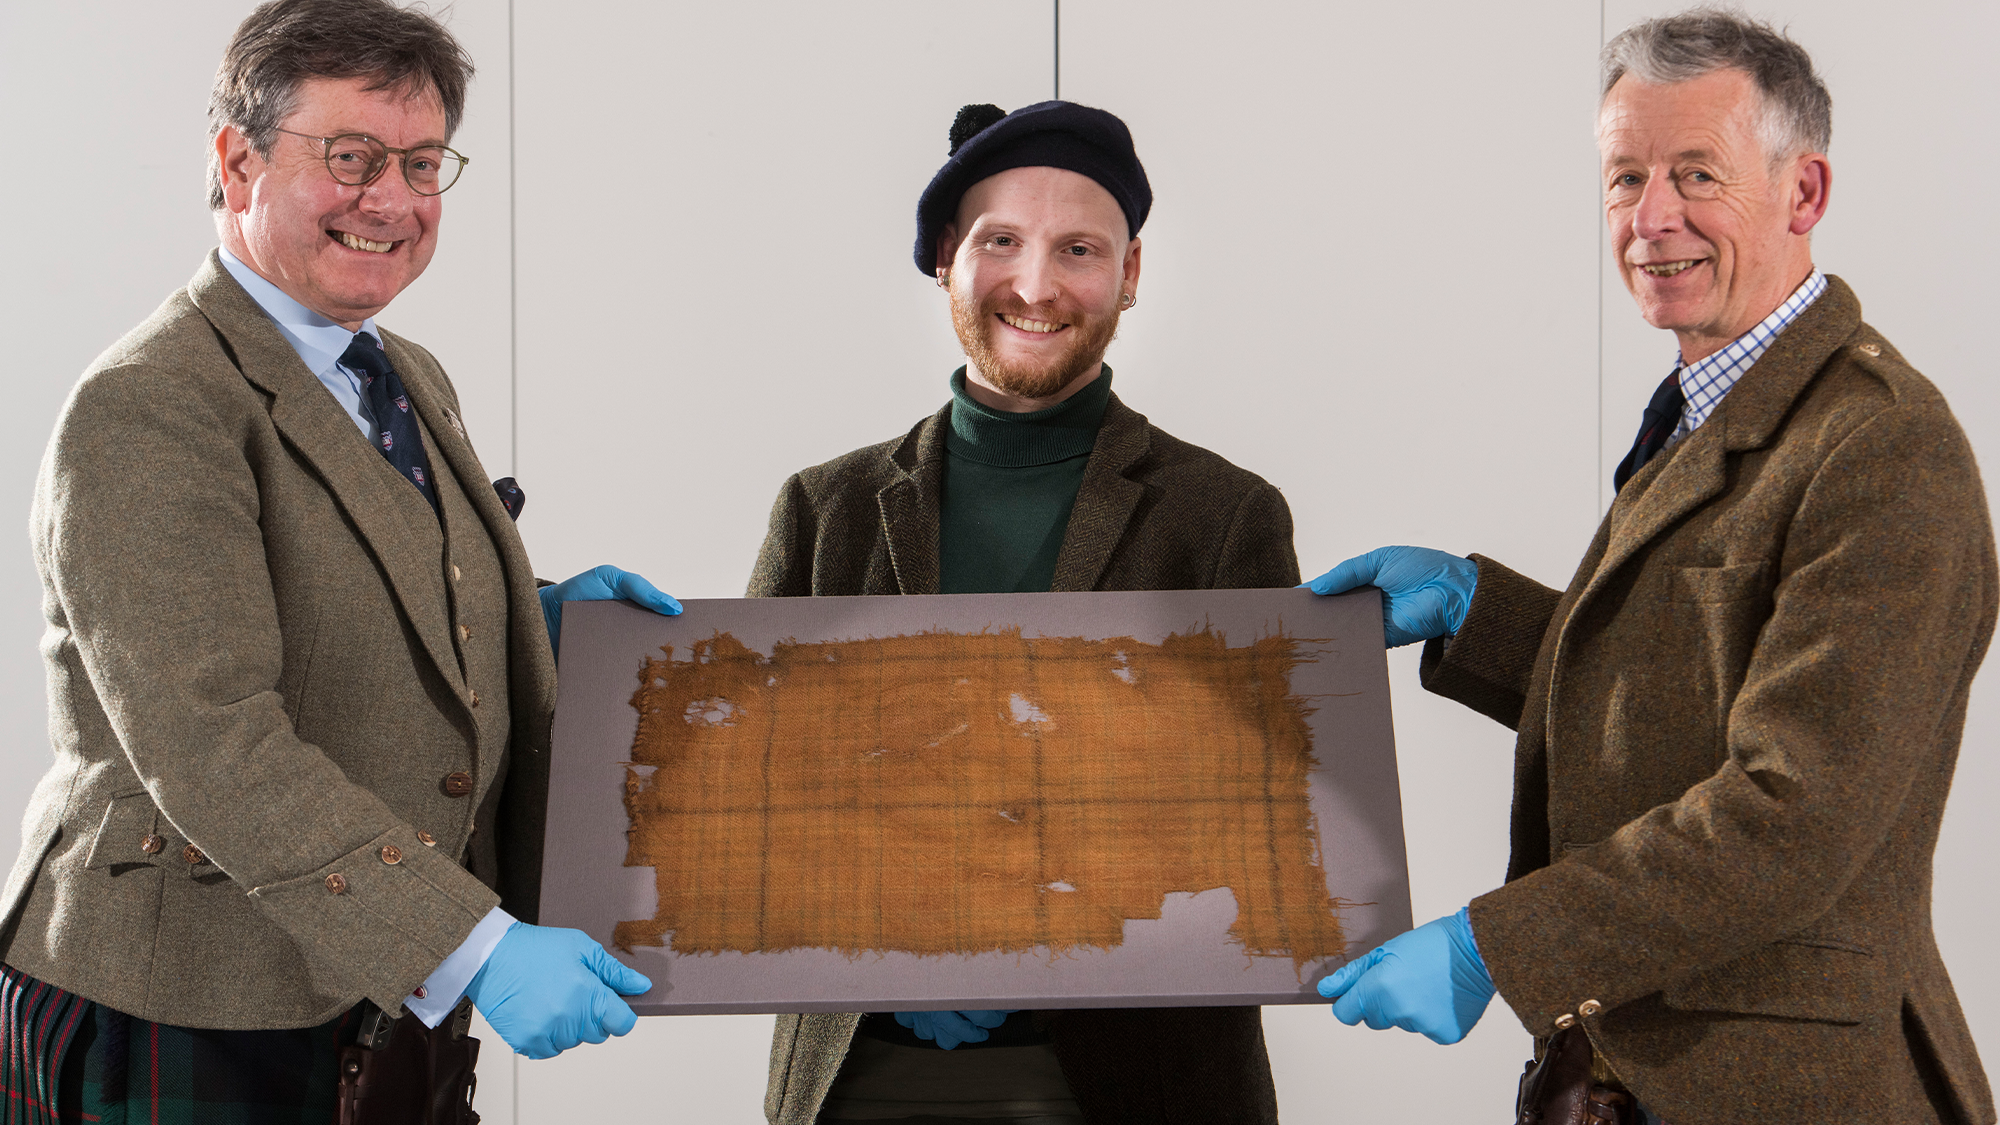 Slàinte mhath! The oldest piece of Scottish tartan fabric has been identified.